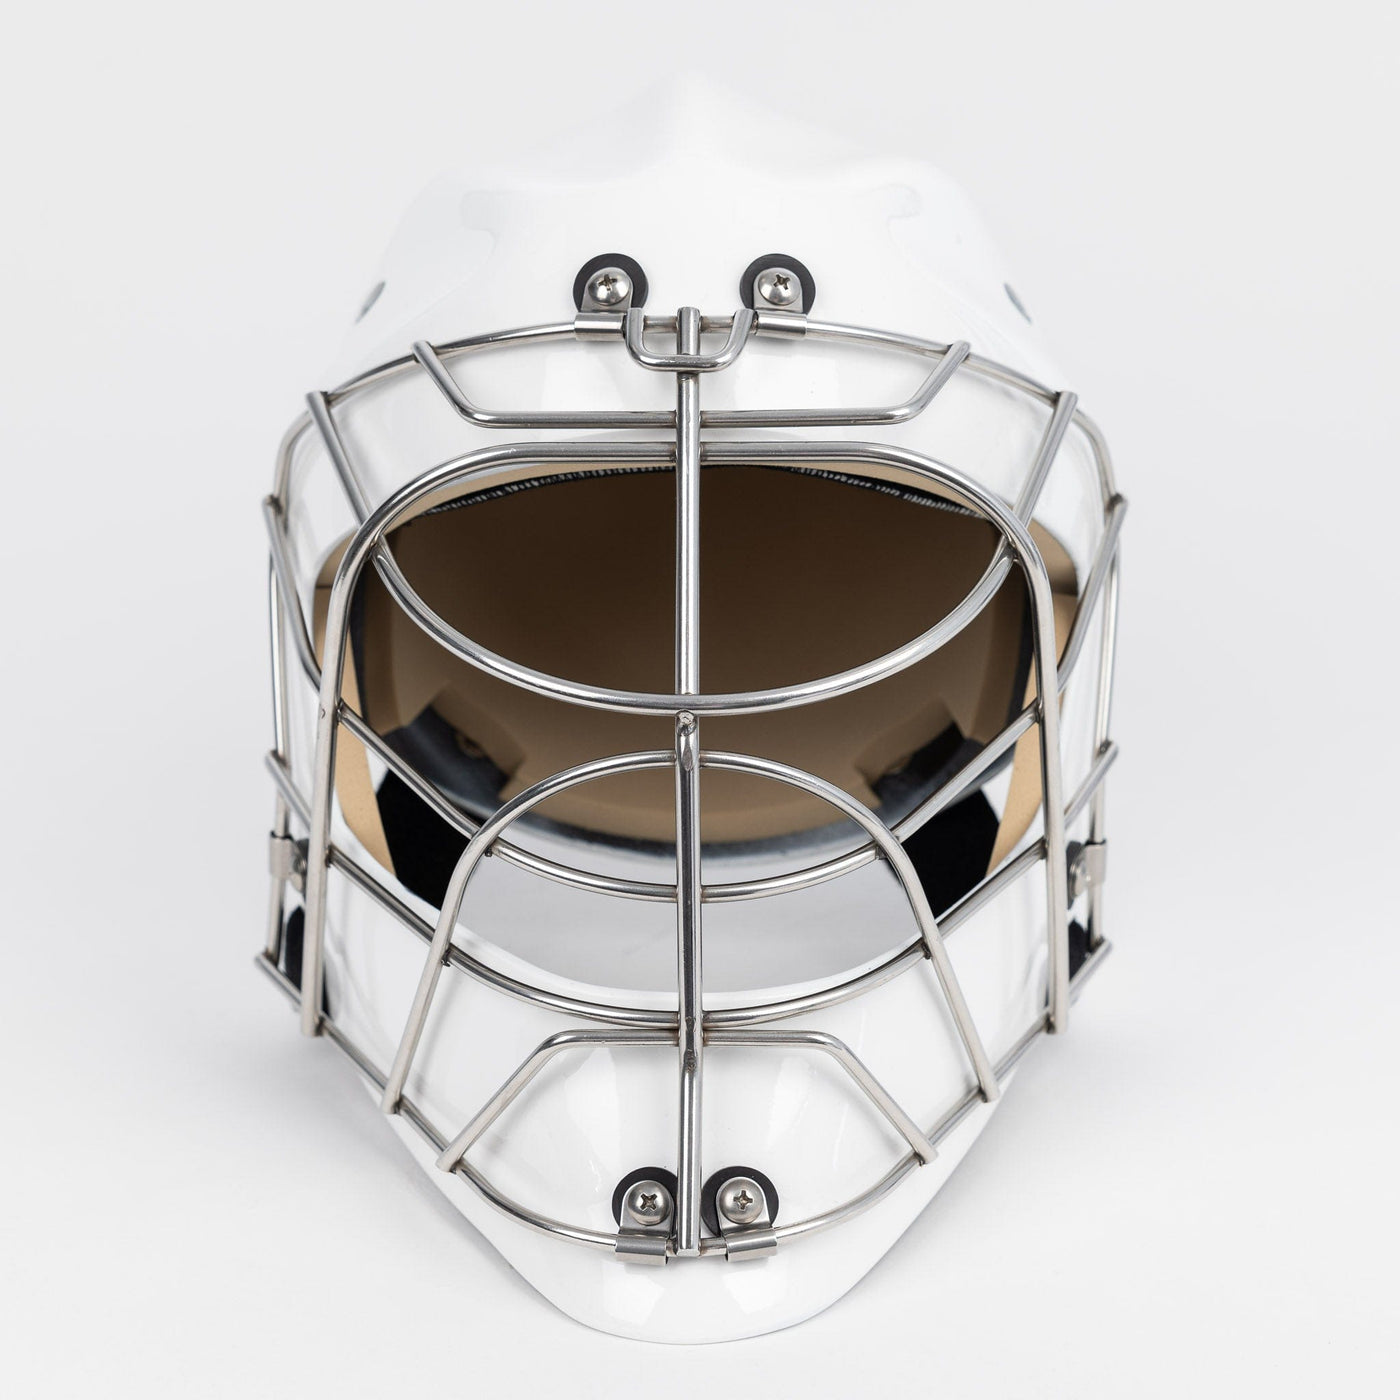 Sportmask Mage RS Senior Goalie Mask - The Hockey Shop Source For Sports